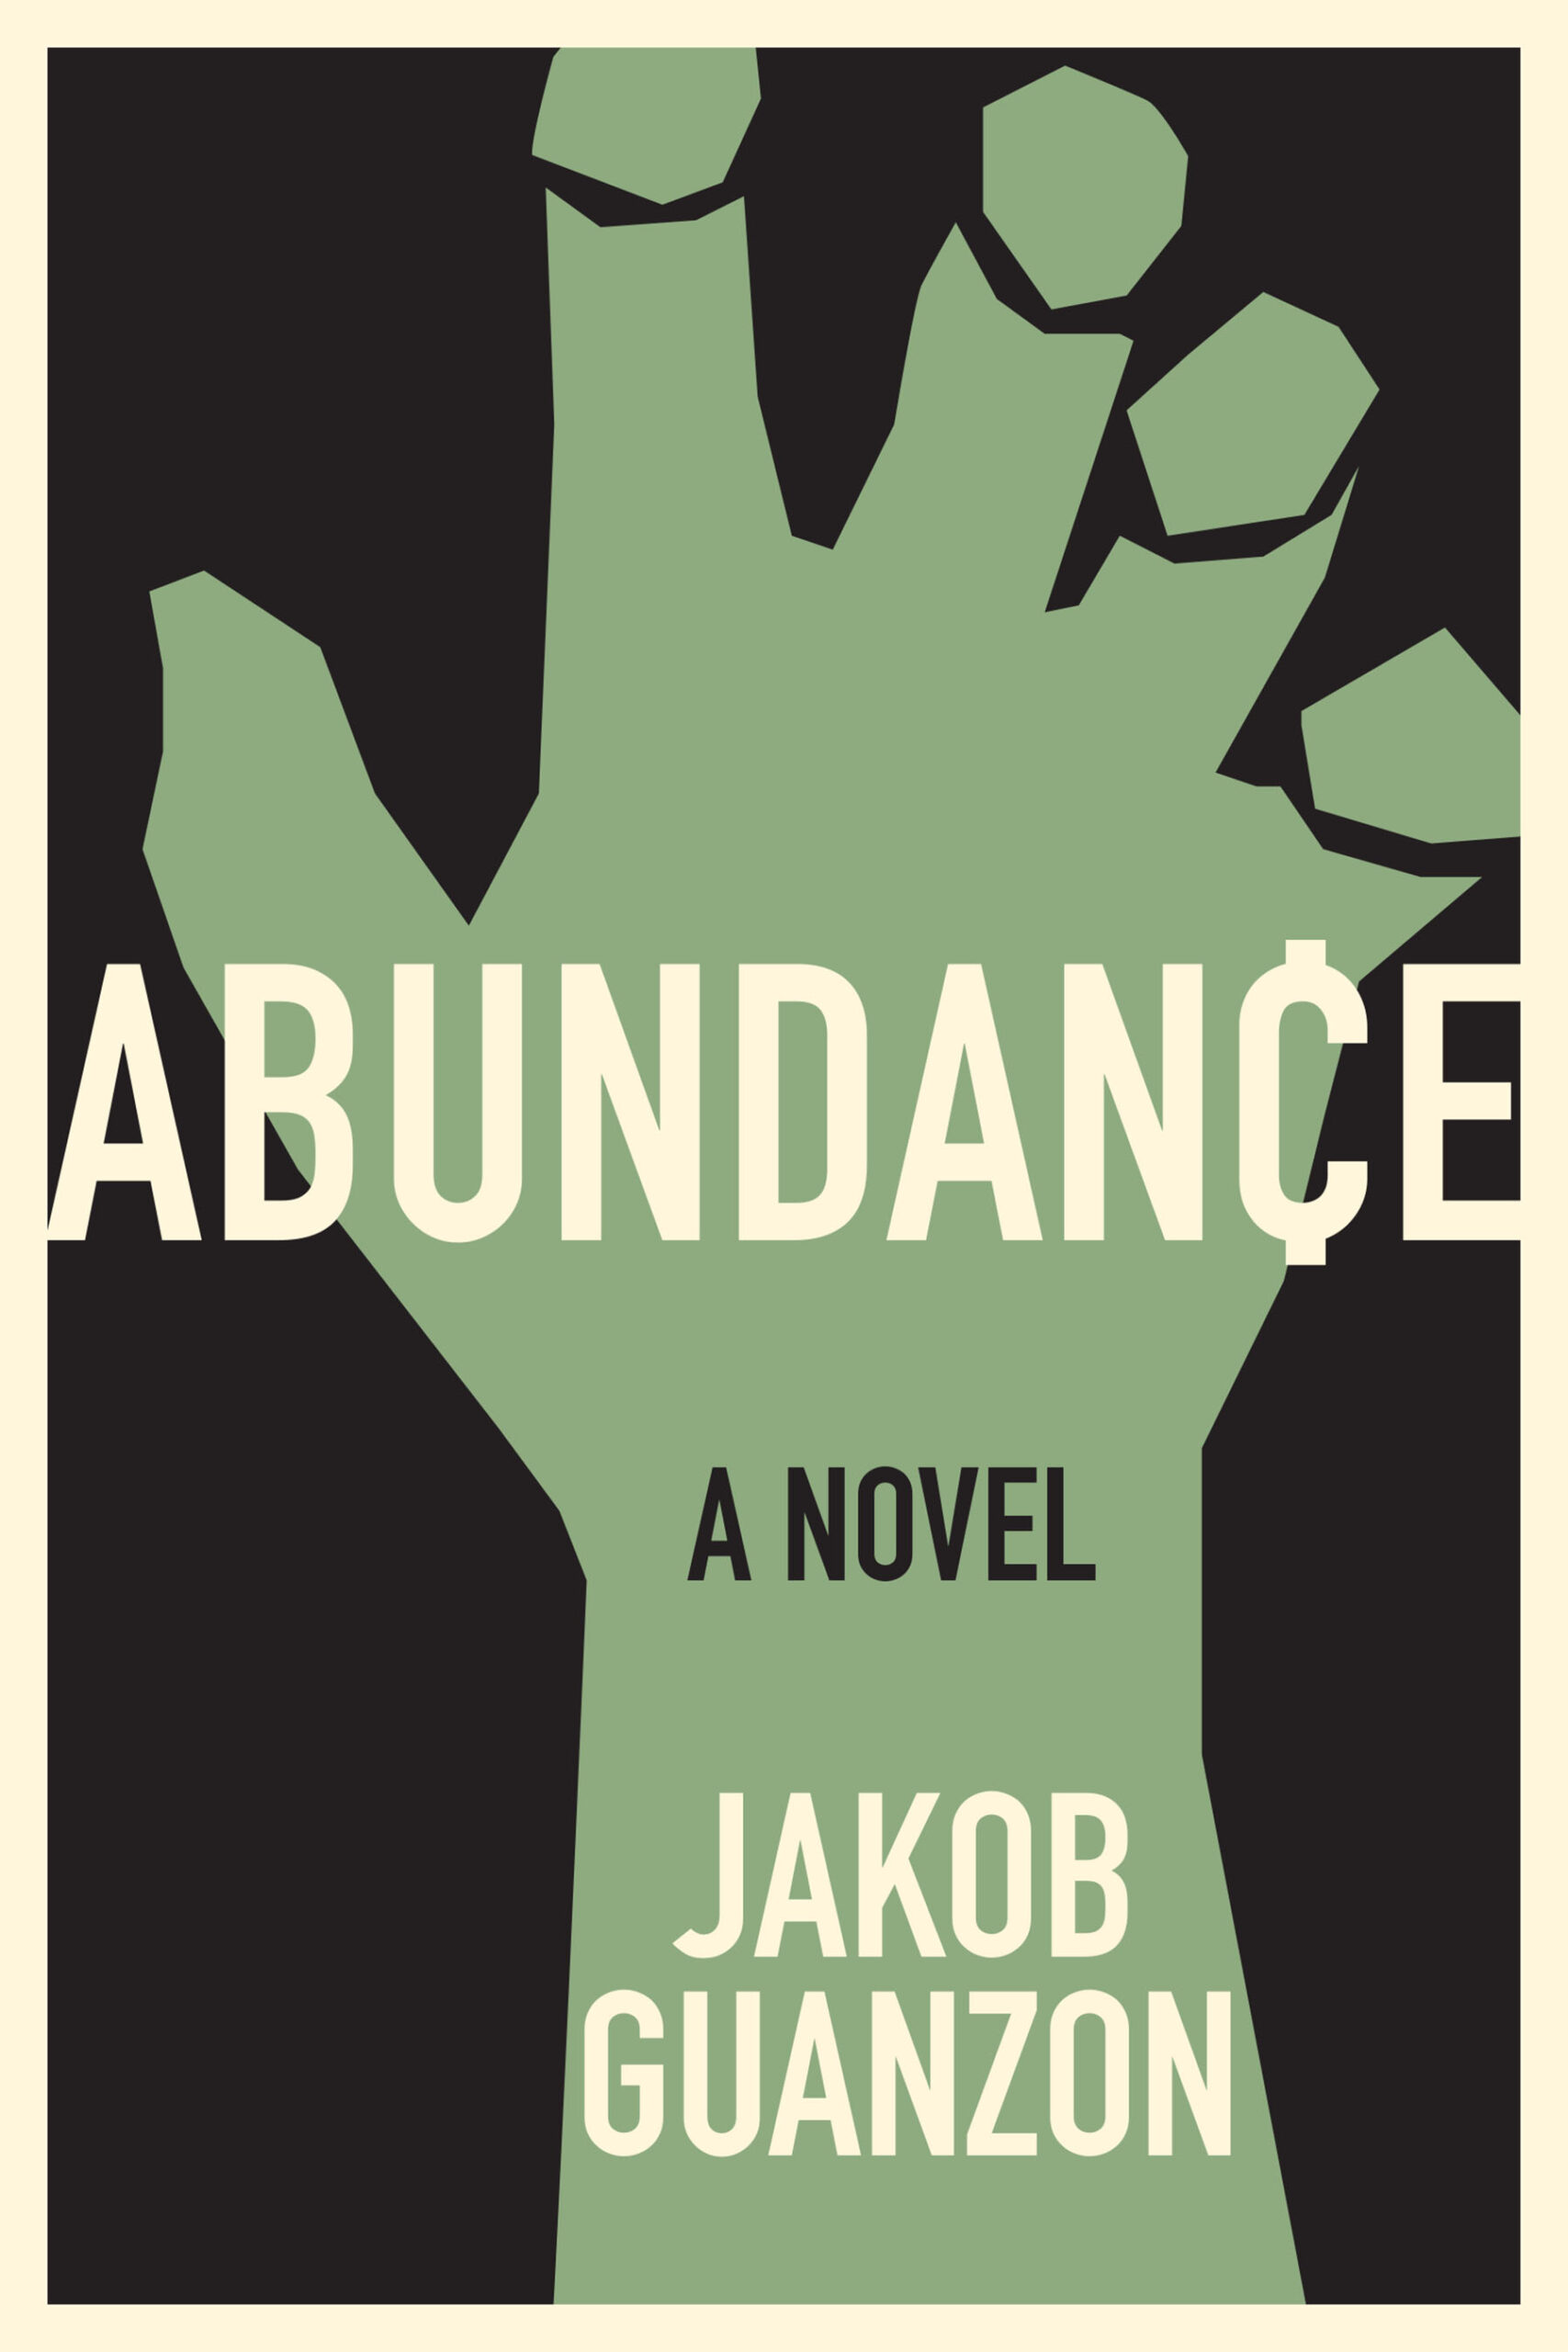 Virtual Book Launch: Abundance by Jakob Guanzon in conversation with Mina Hamedi